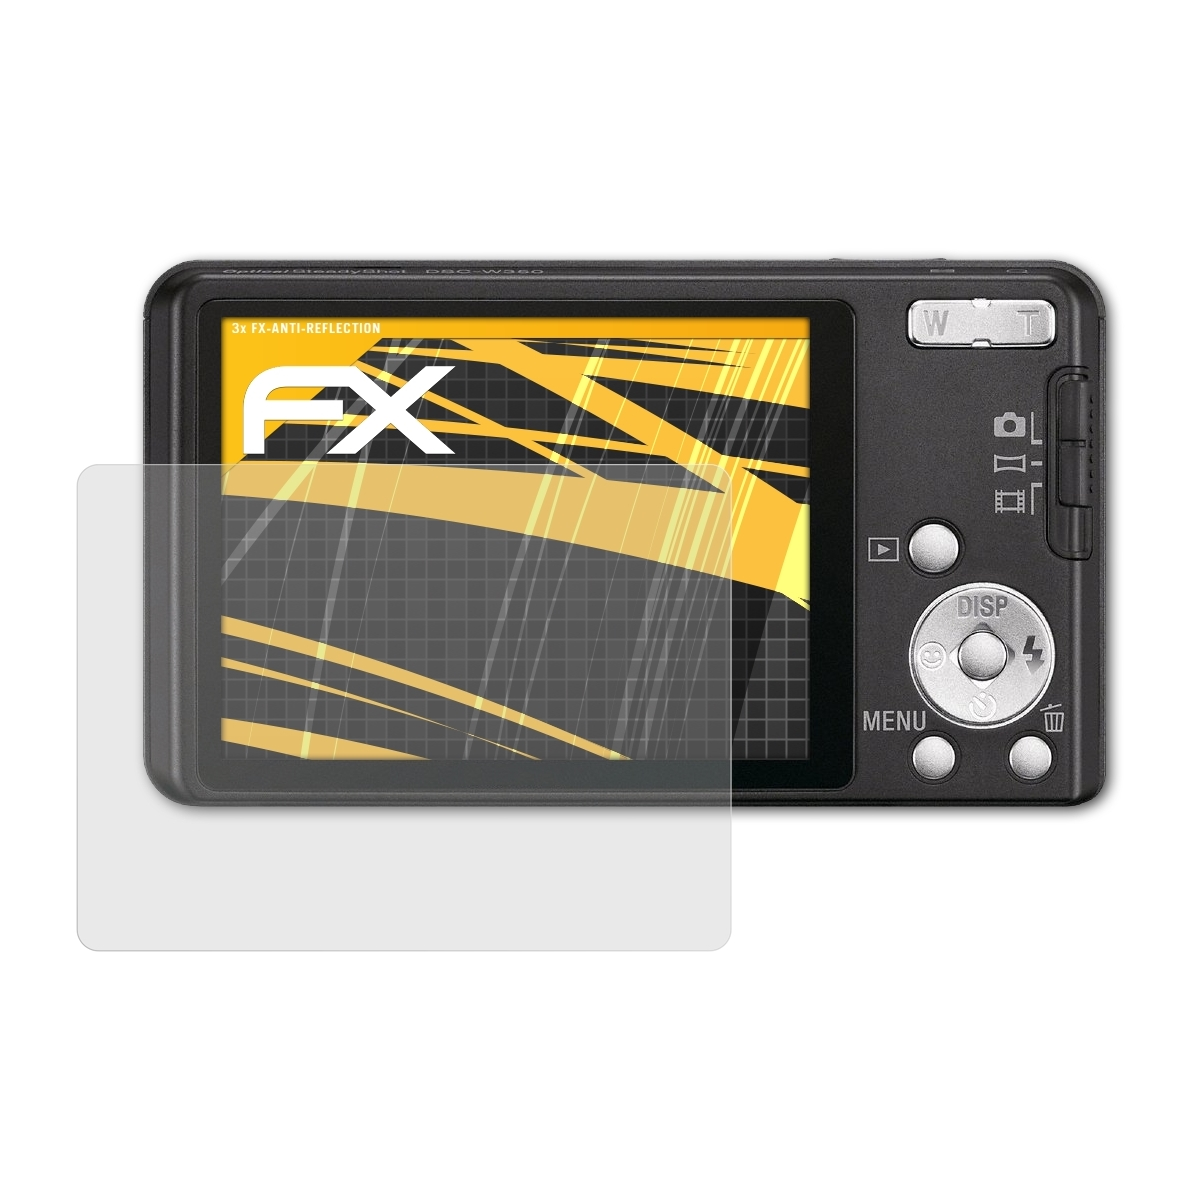 Sony DSC-W350) Displayschutz(für FX-Antireflex 3x ATFOLIX